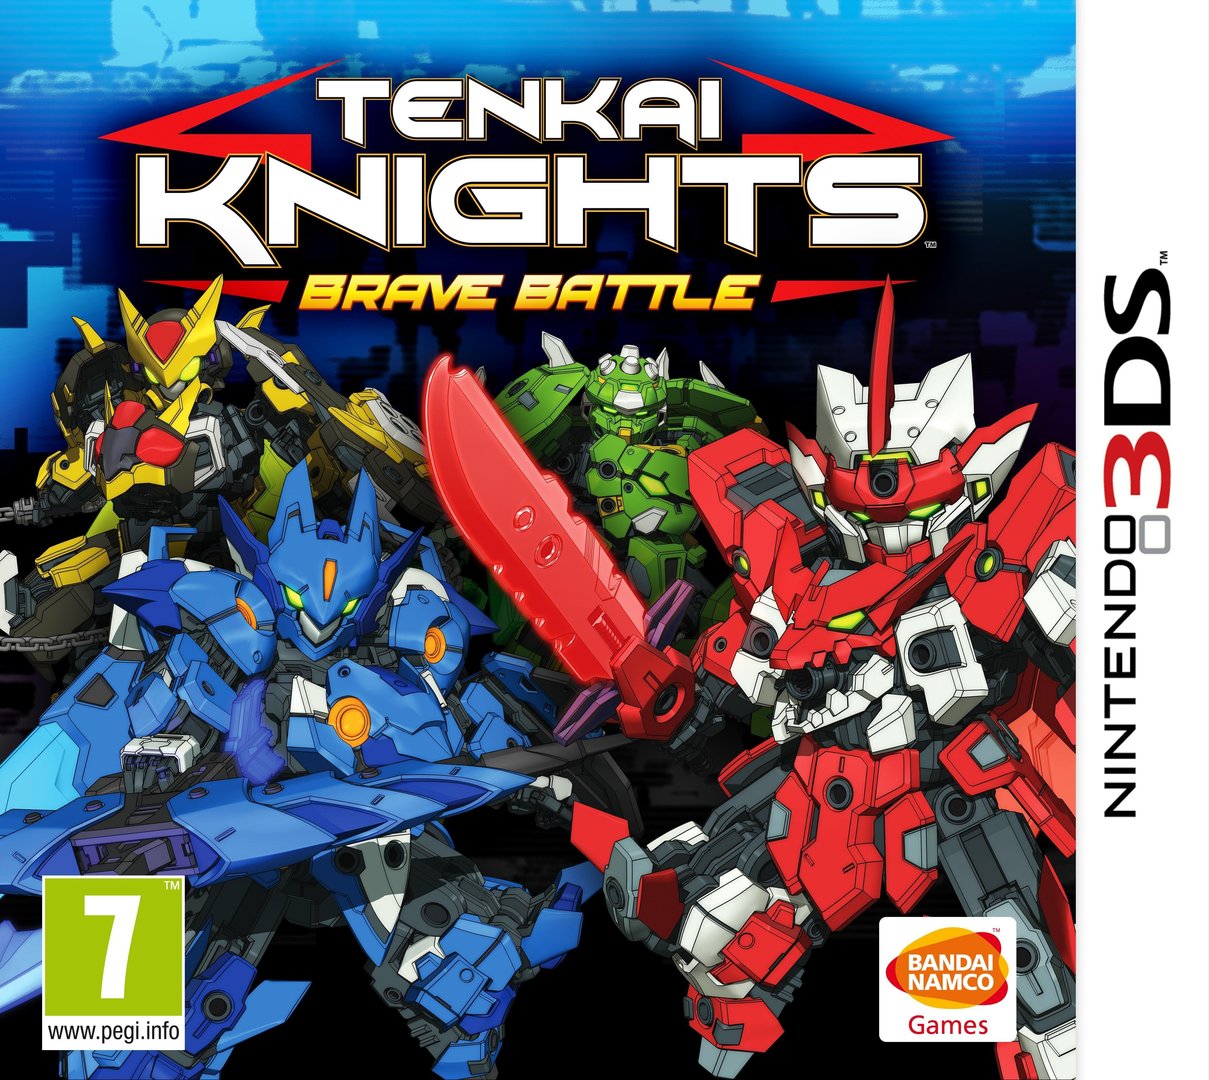 Tenkai Knights: Brave Battle (3DS), Namco Bandai